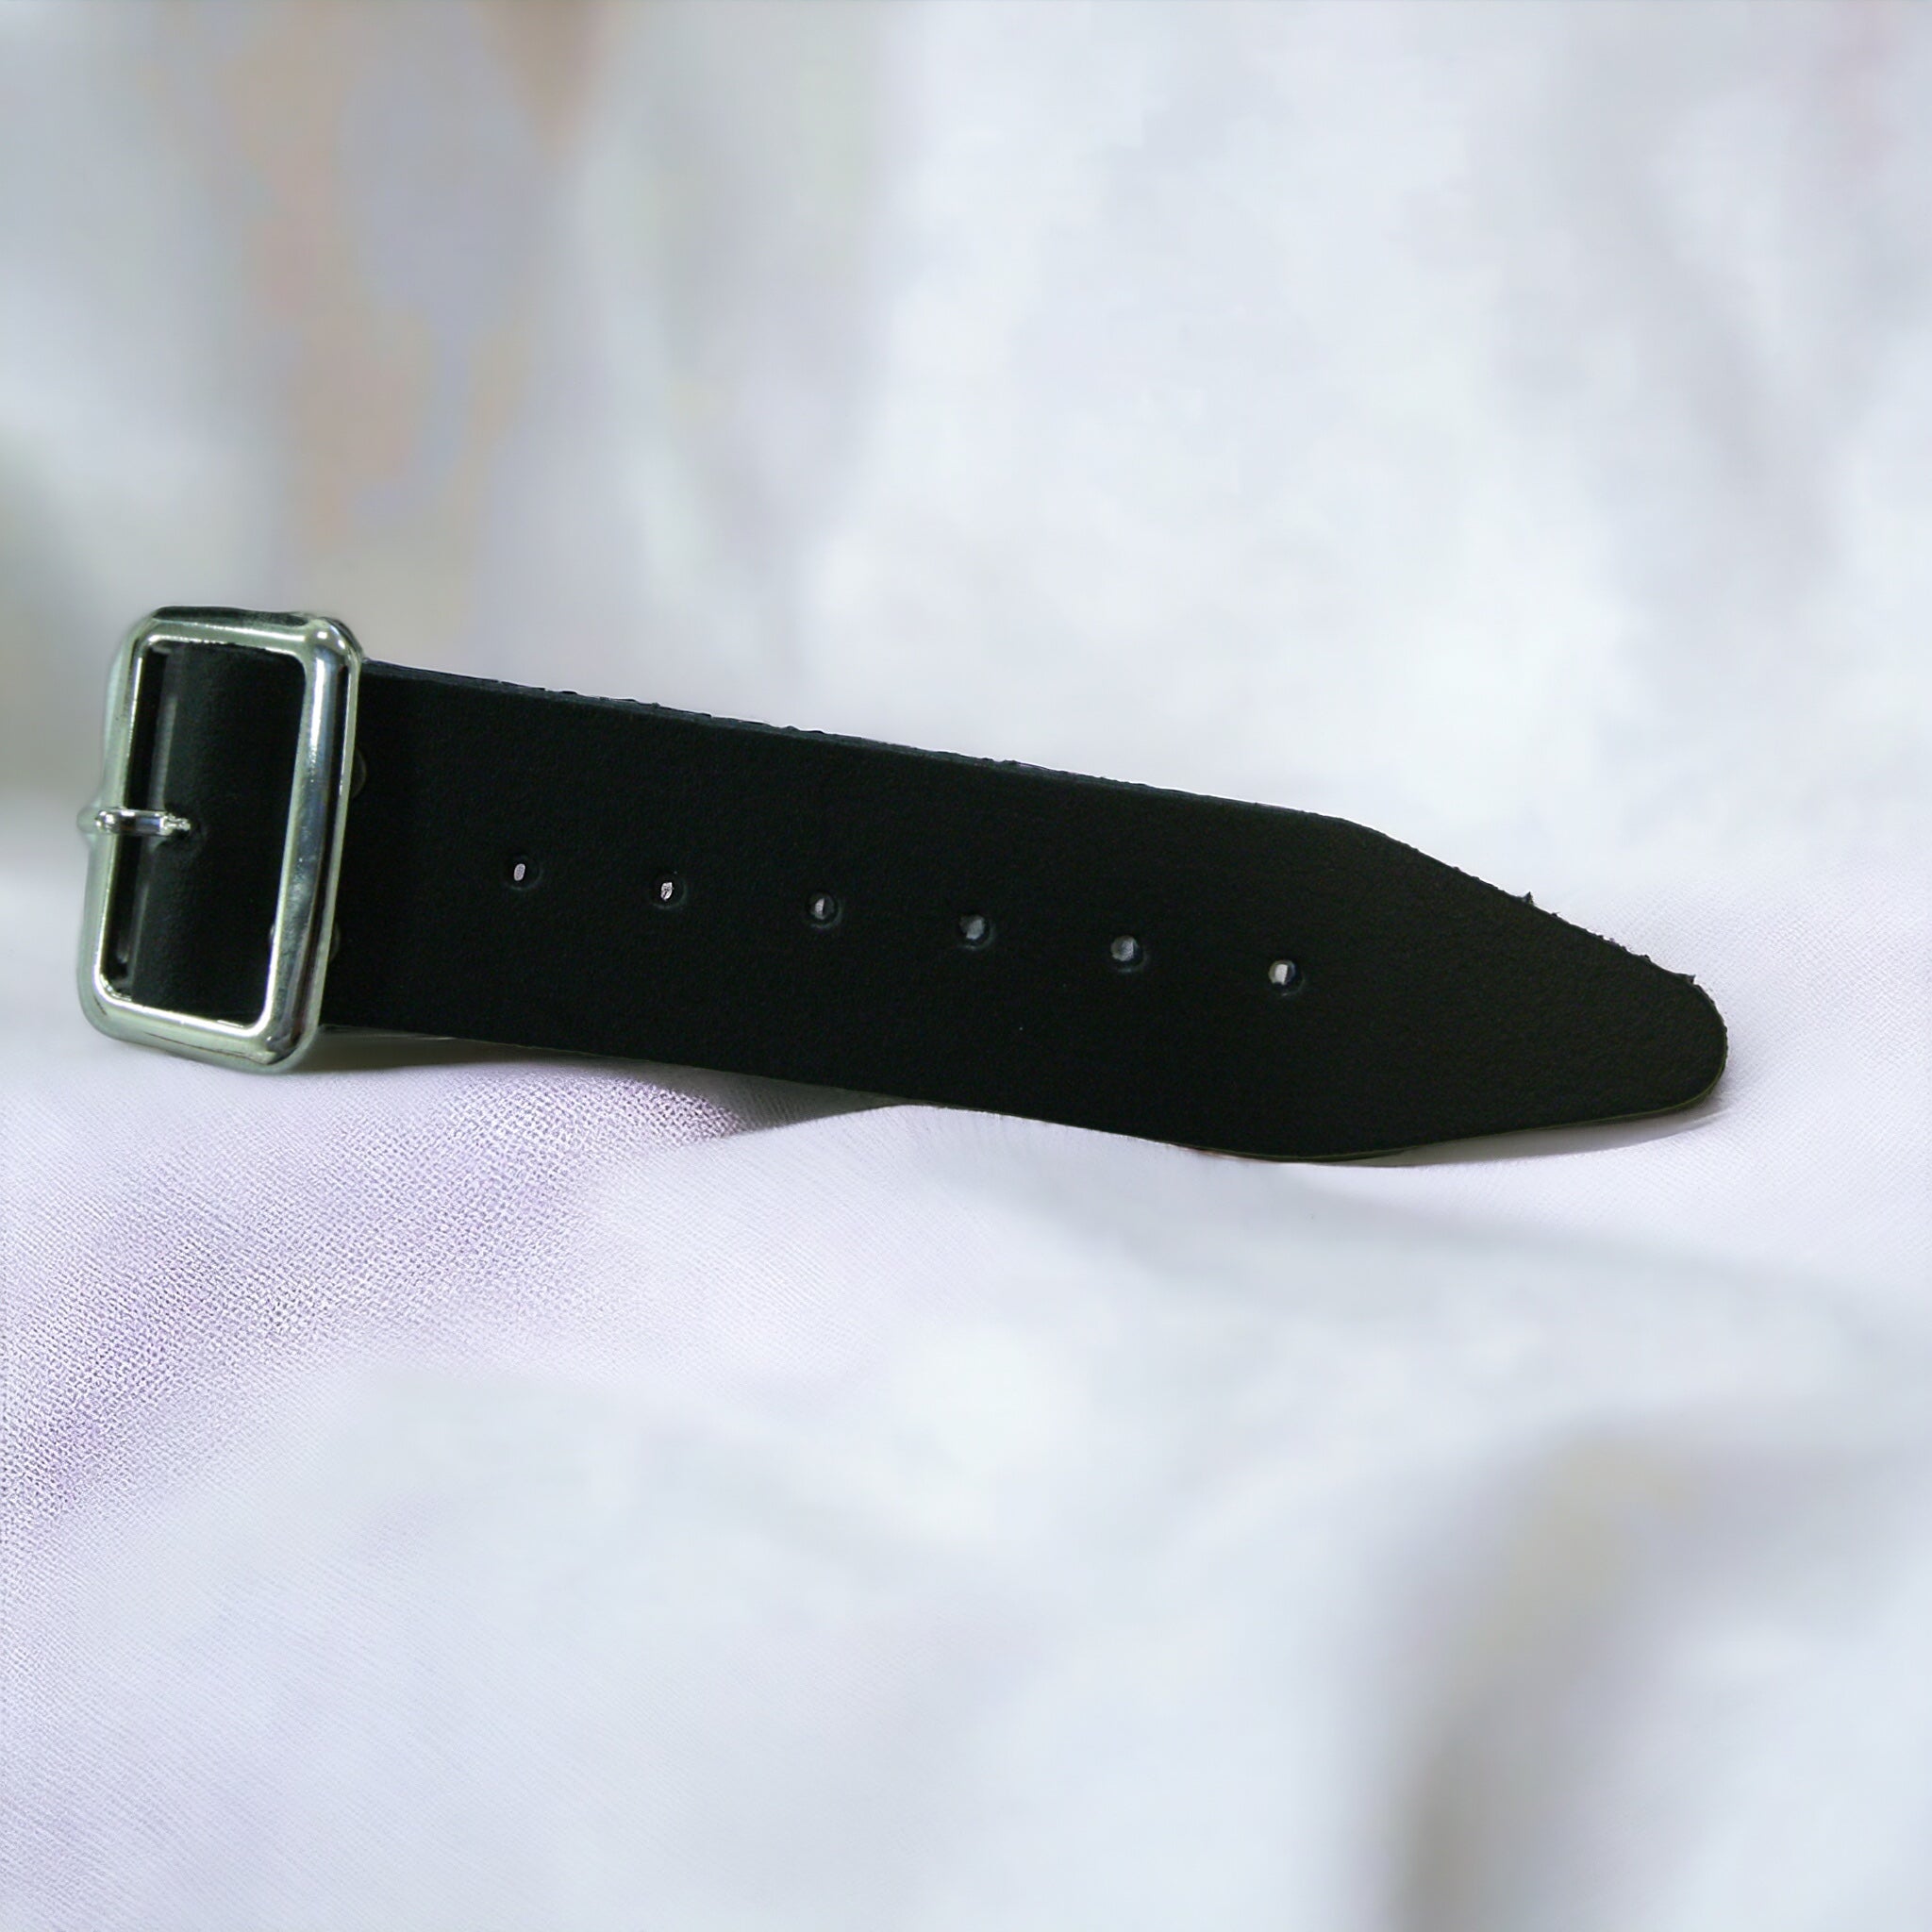 Kilt strap extender with buckle  made by Margaret Morrison